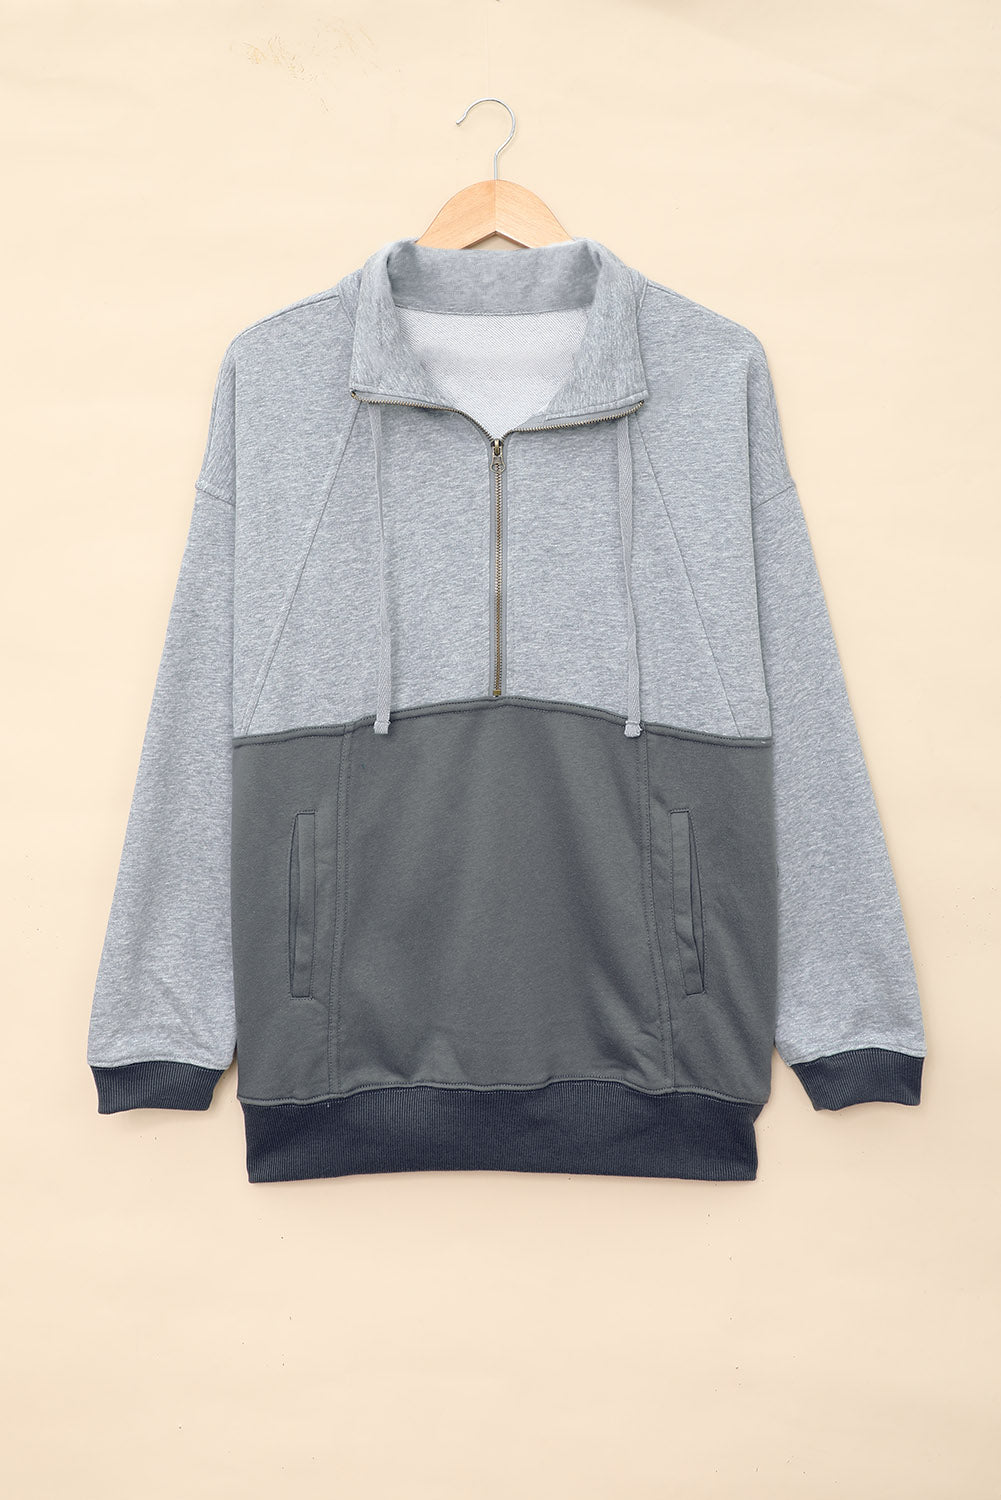 Zipped Colorblock Sweatshirt with Pockets